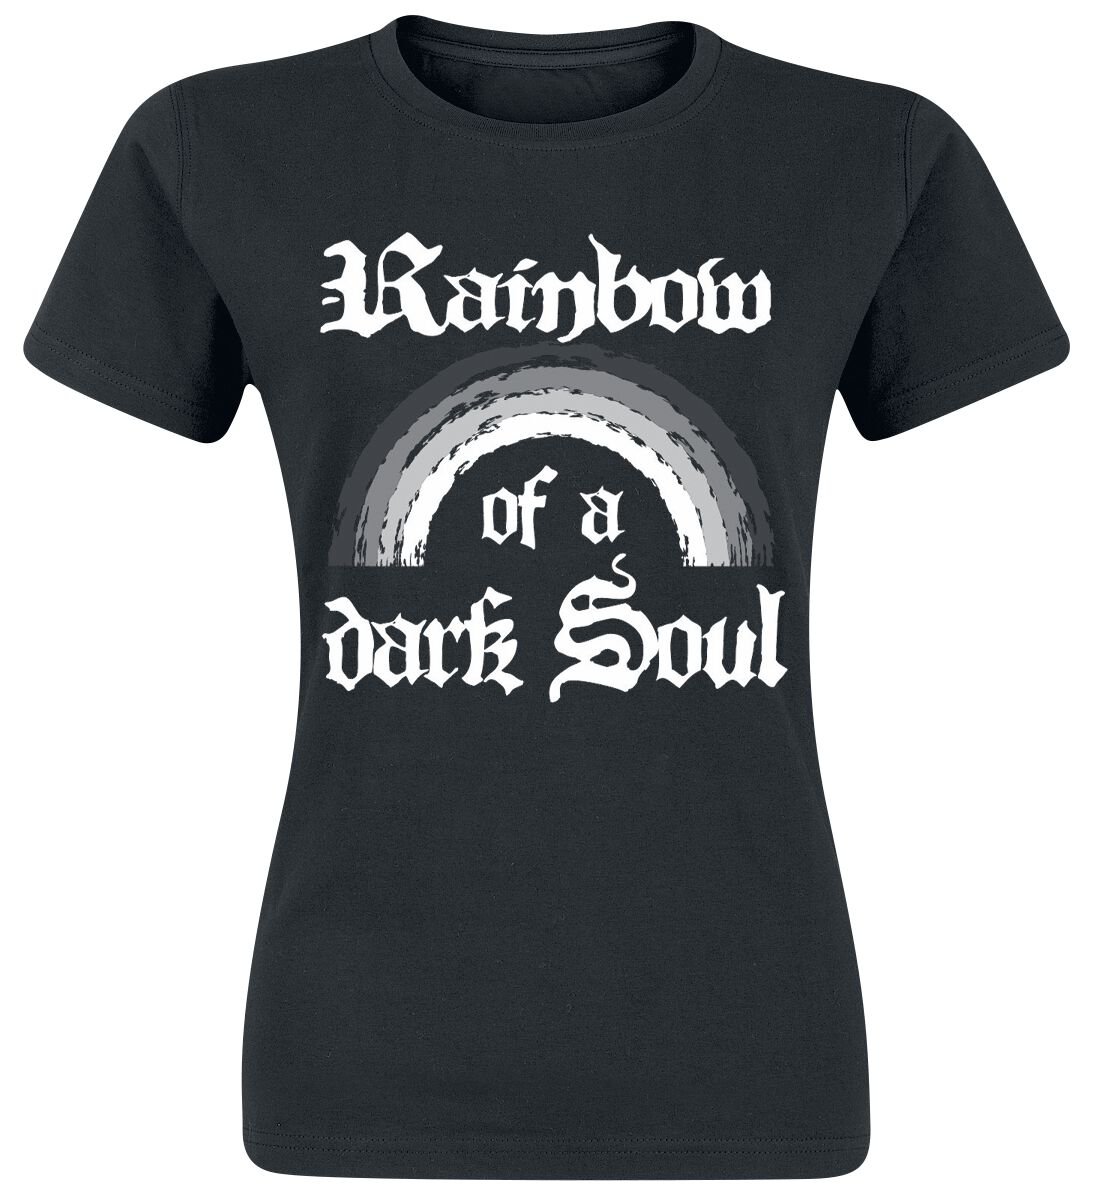 Slogans Rainbow Of A Dark Soul T-Shirt black